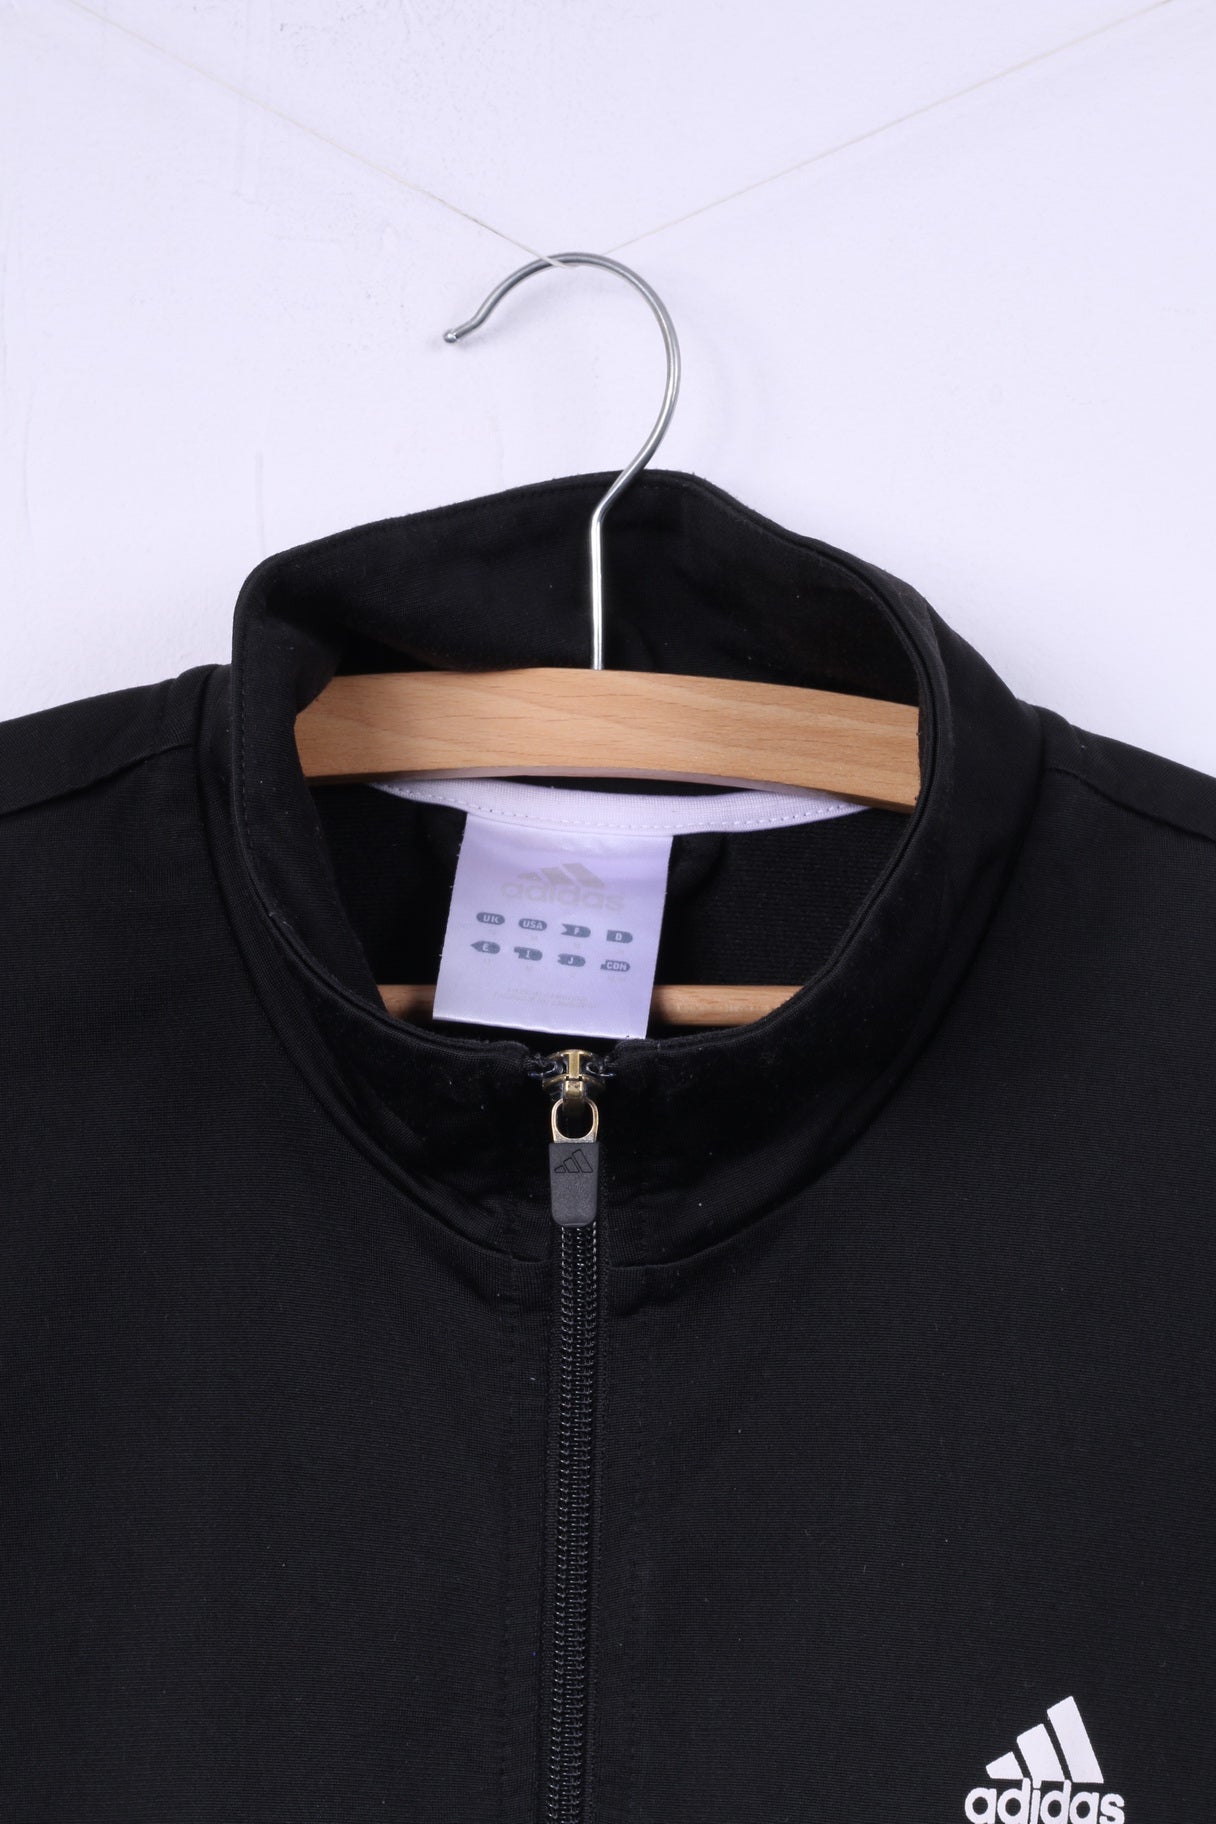 Adidas Mens M Sweatshirt Full Zipper Black Sportswear Shiny Track Top